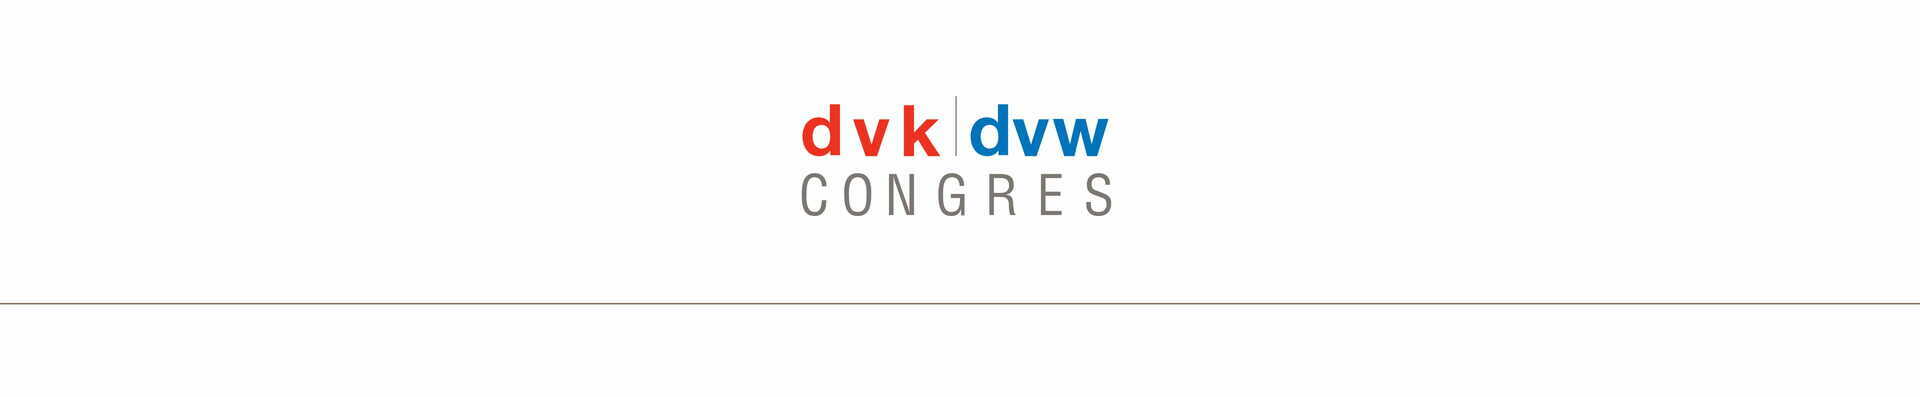 dvk | dvw congres 